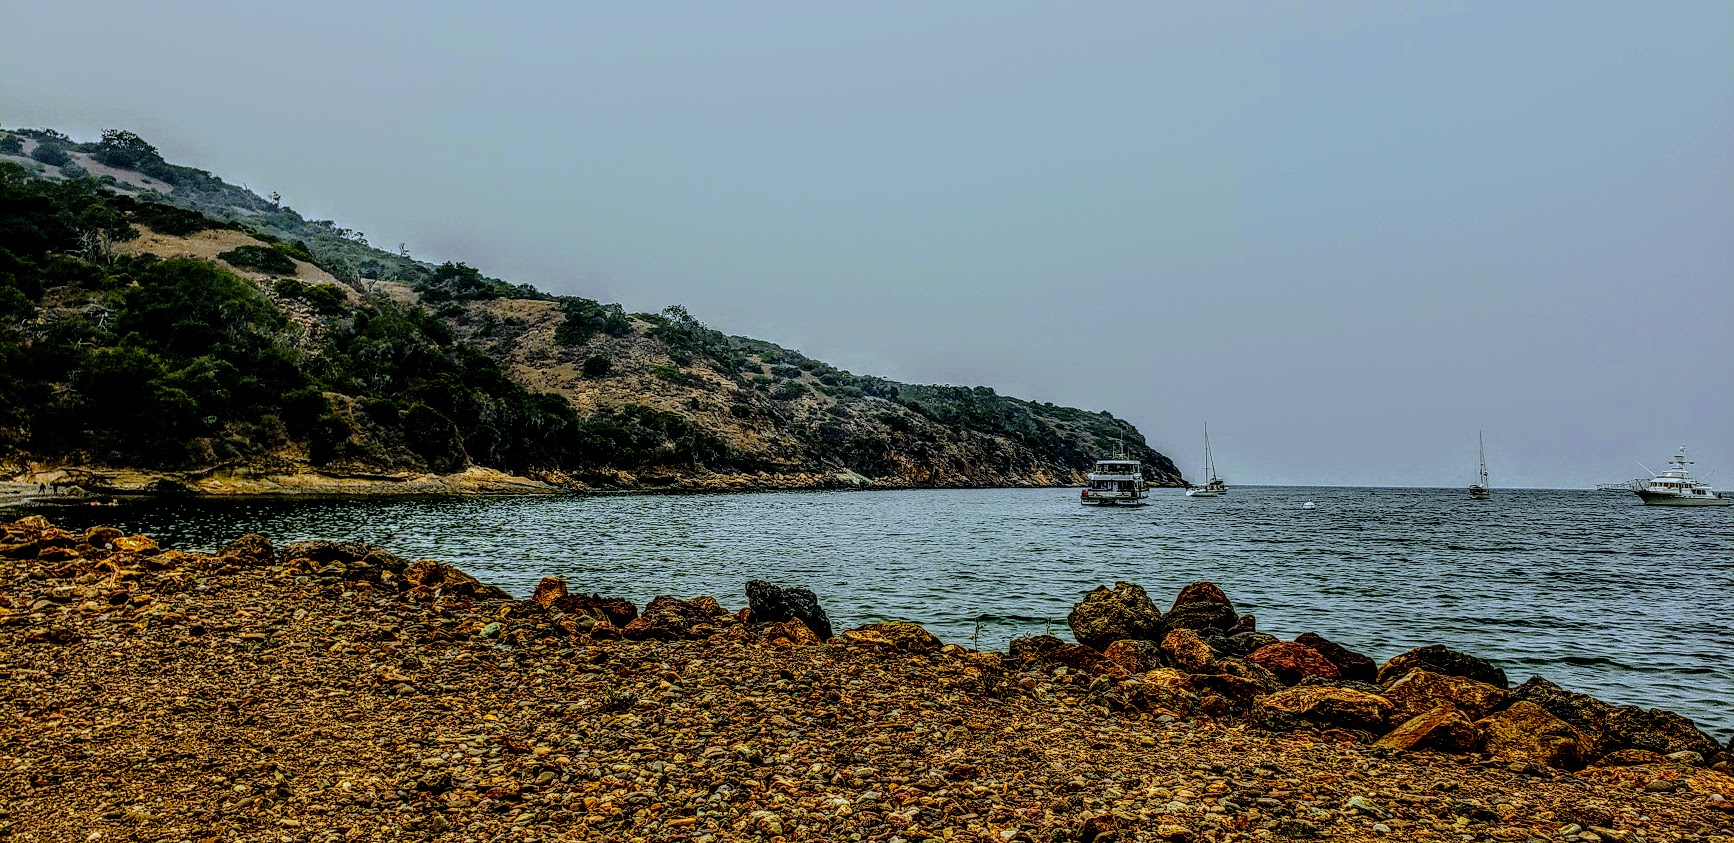 santa cruz island, prisoner's harbor, channel islands